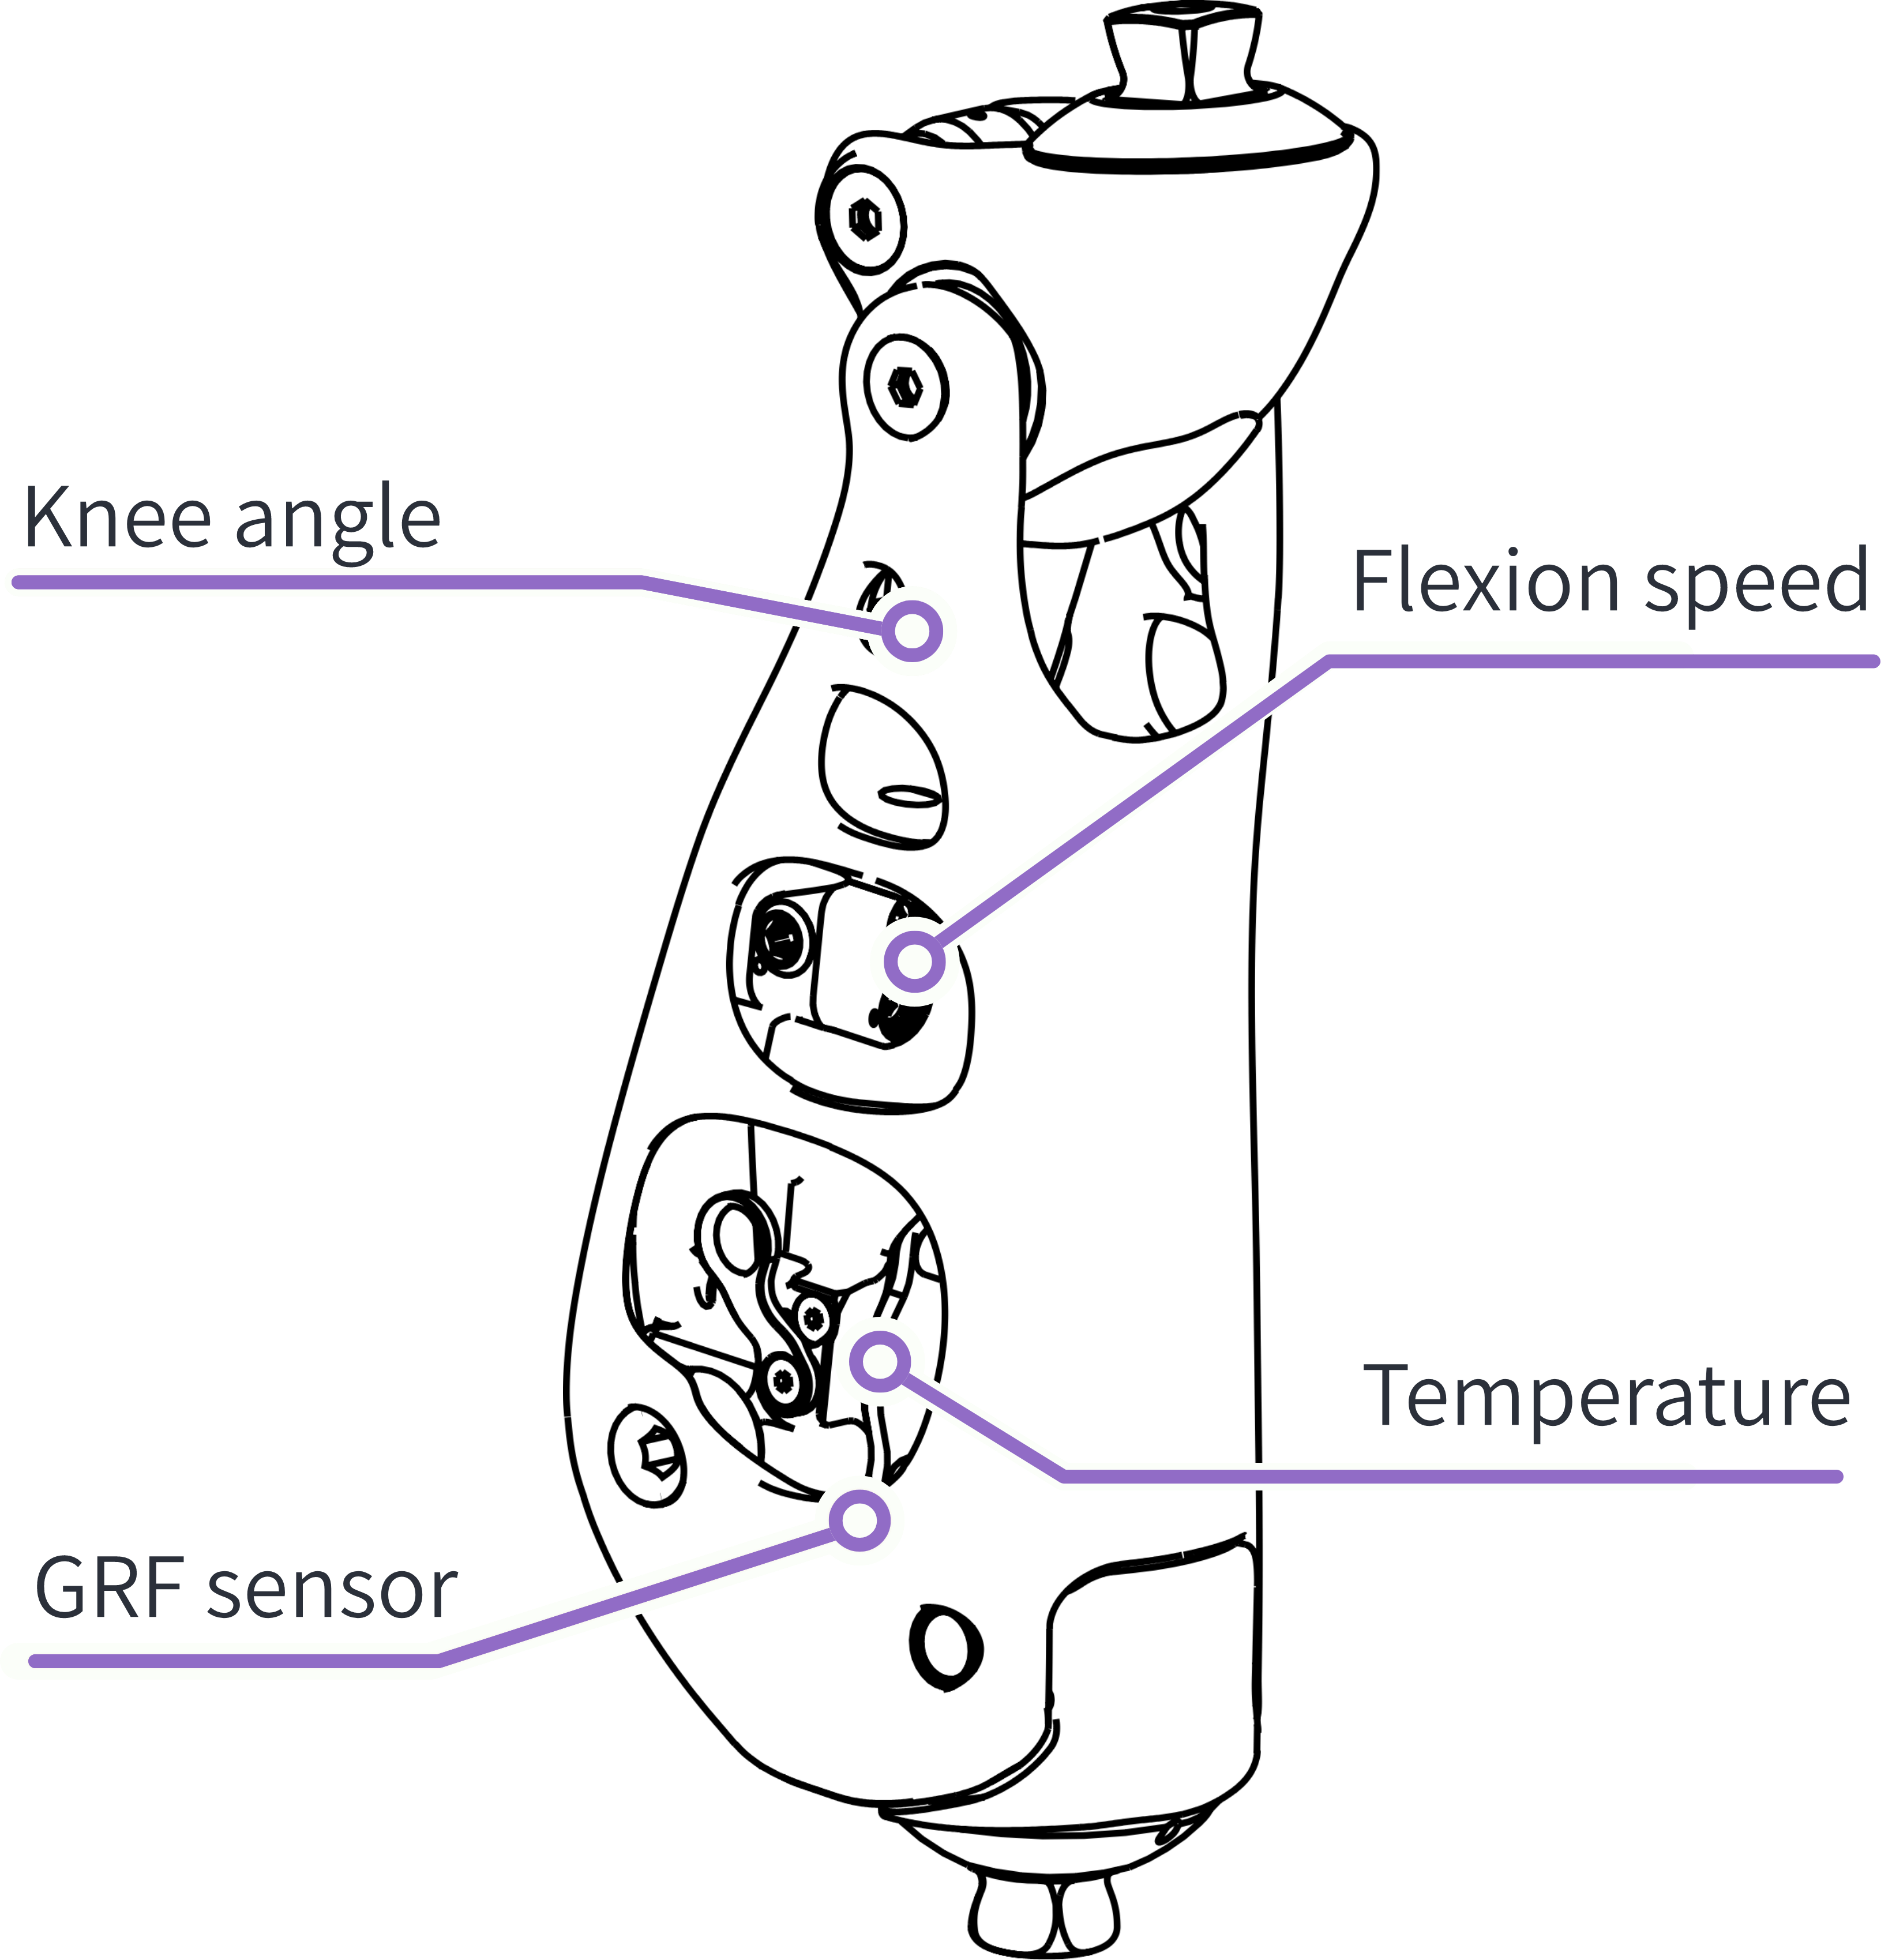 Patented fluidic sensors in the FPK: (1) knee angle (2) flexion speed (3) temperature sensor (4) GRF sensor